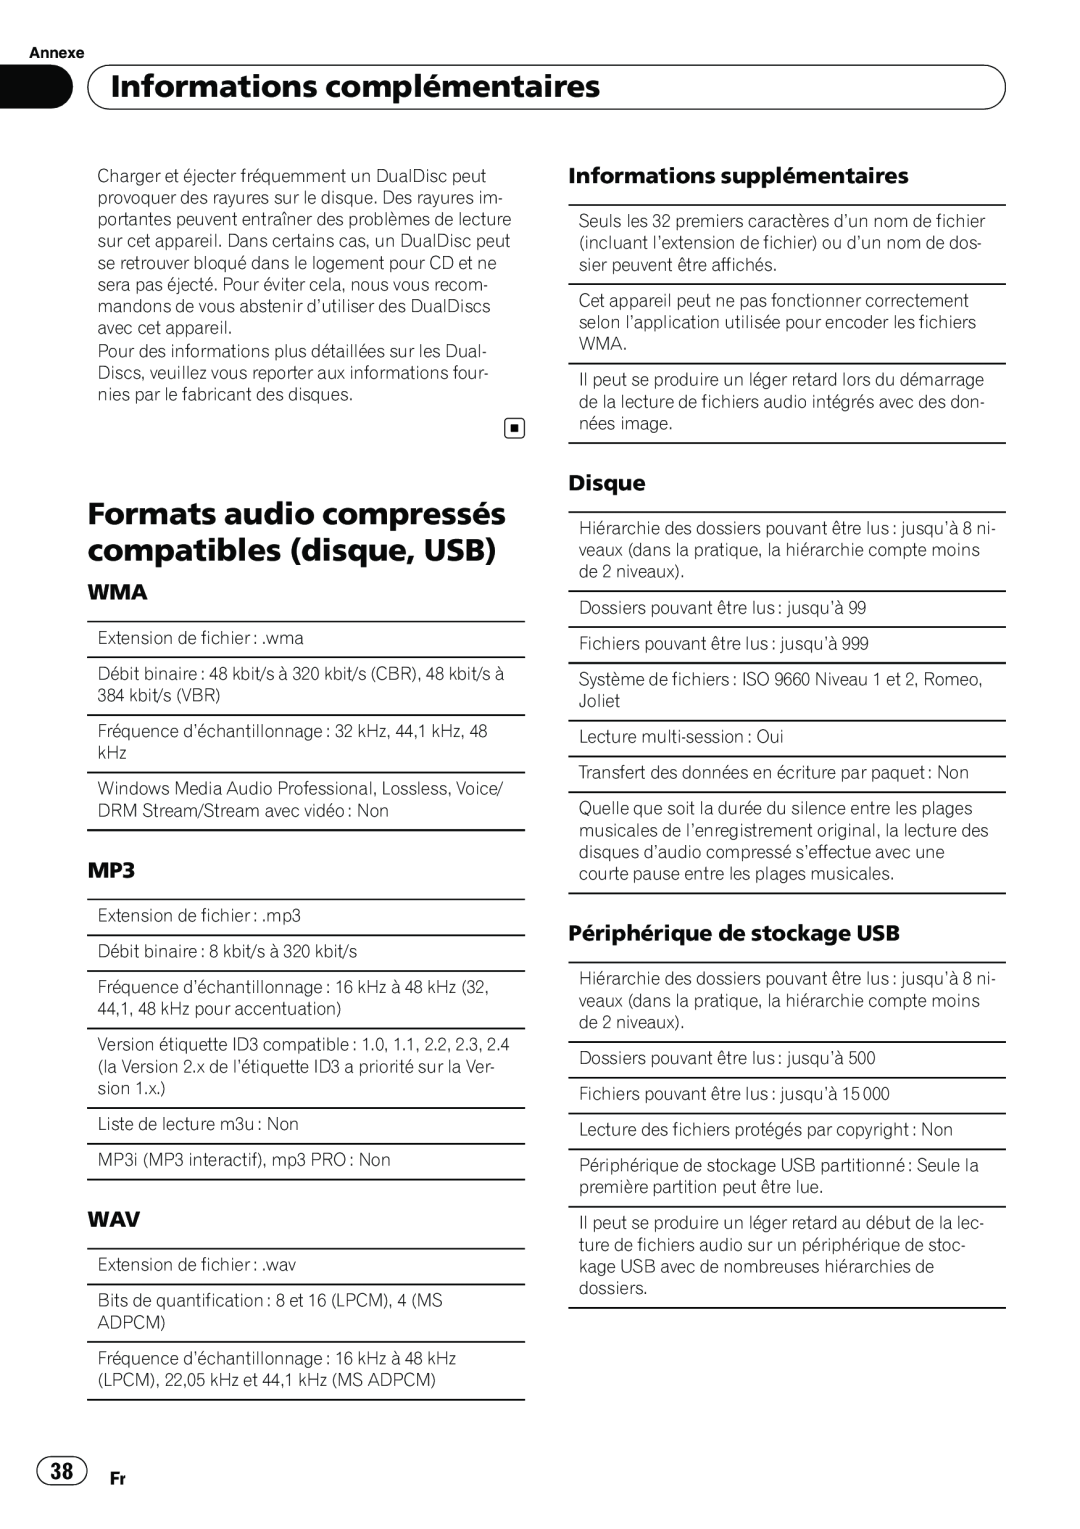 Pioneer DEH-22UB owner manual Formats audio compressés compatibles disque, USB, Informations complémentaires, Disque 